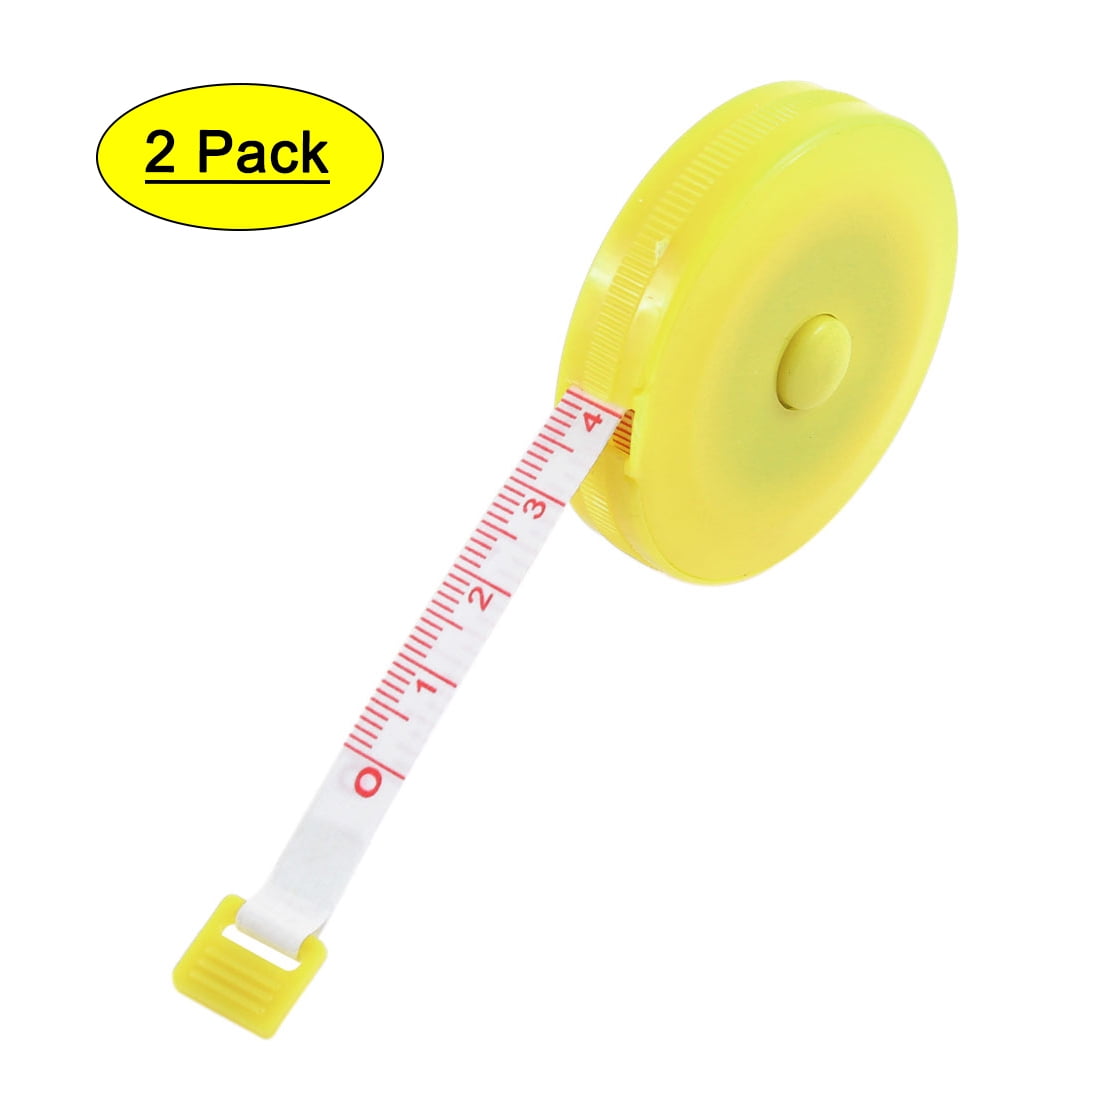 Prokart's Sewing Measuring Ruler Tape (60-Inches, 6 X 1.5 m)/Body Measurement  Tape/Measurement Tape for Tailoring /Measurement Tape for Clothes/Measurement  Tape Plastic – Prokart